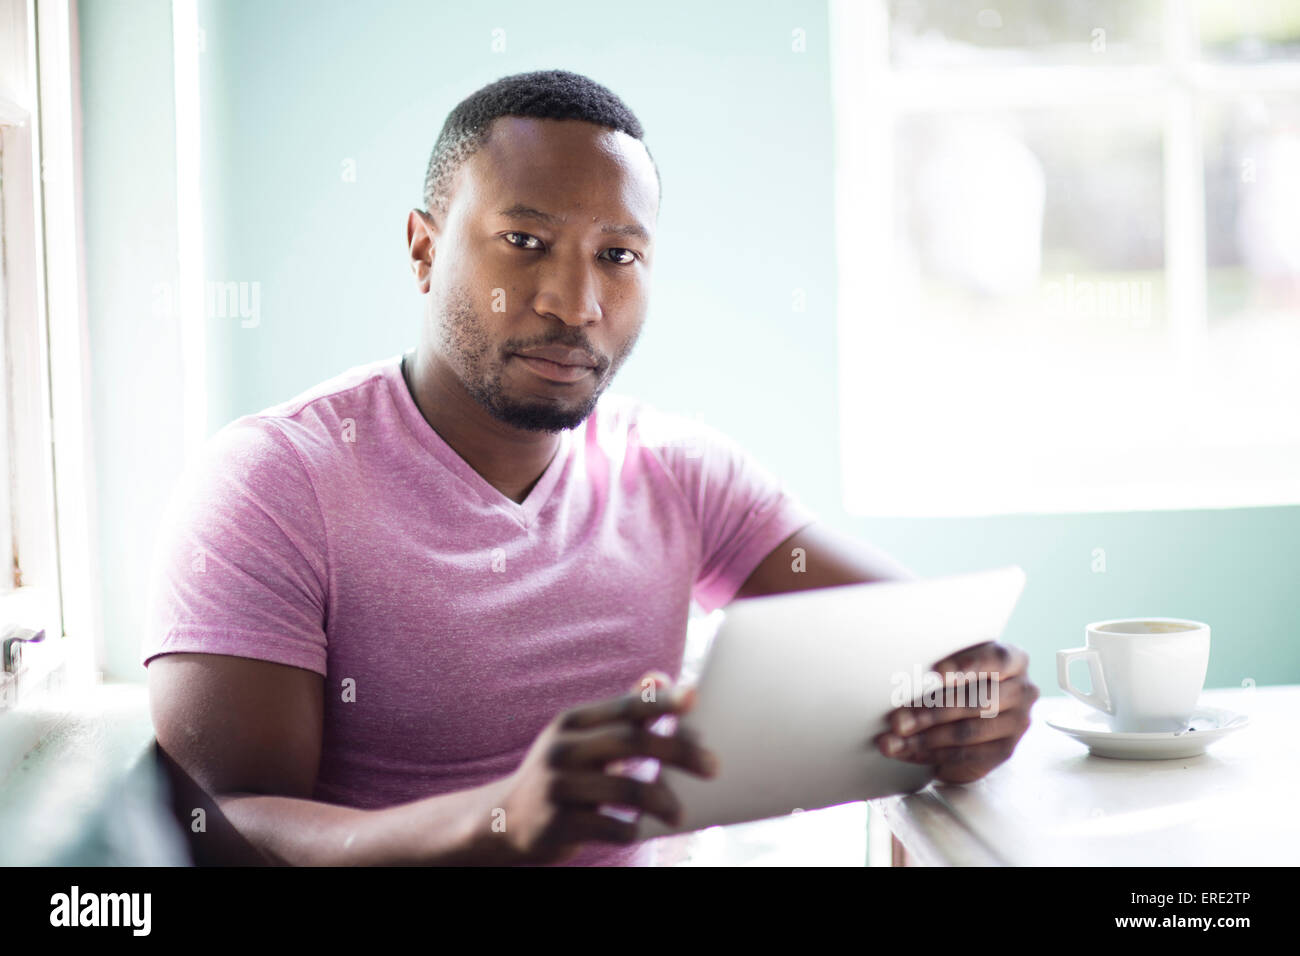 Black man using digital tablet Stock Photo